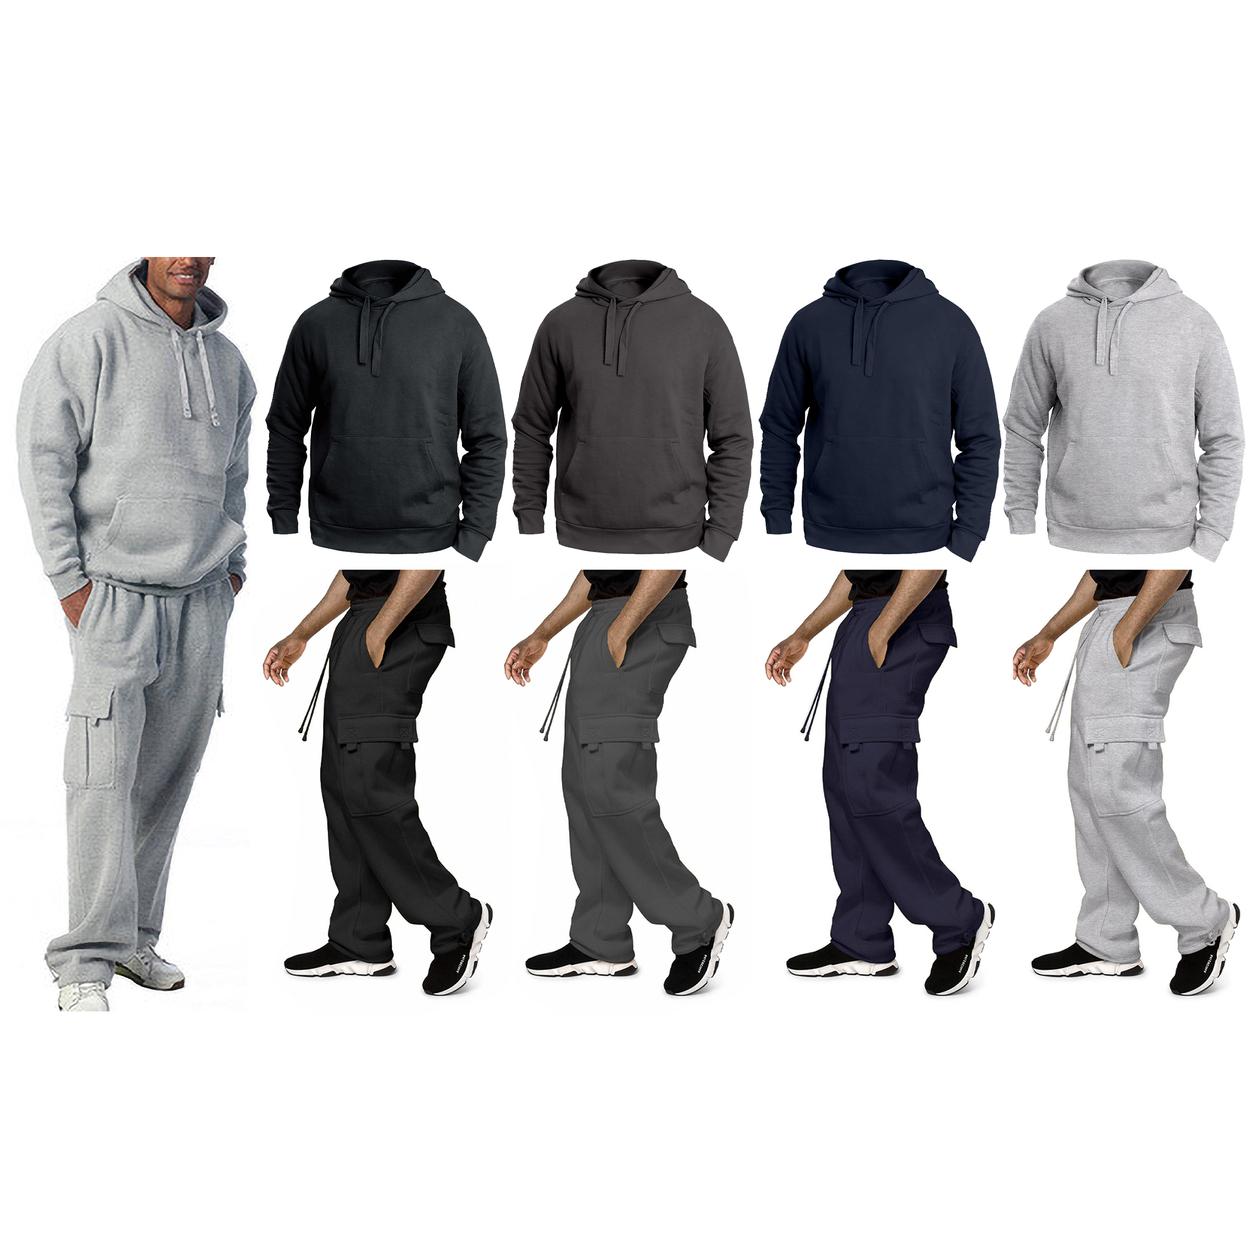 2-Pack: Men's Big & Tall Winter Warm Cozy Athletic Fleece Lined Multi-Pocket Cargo Sweatsuit - Charcoal, Xx-large